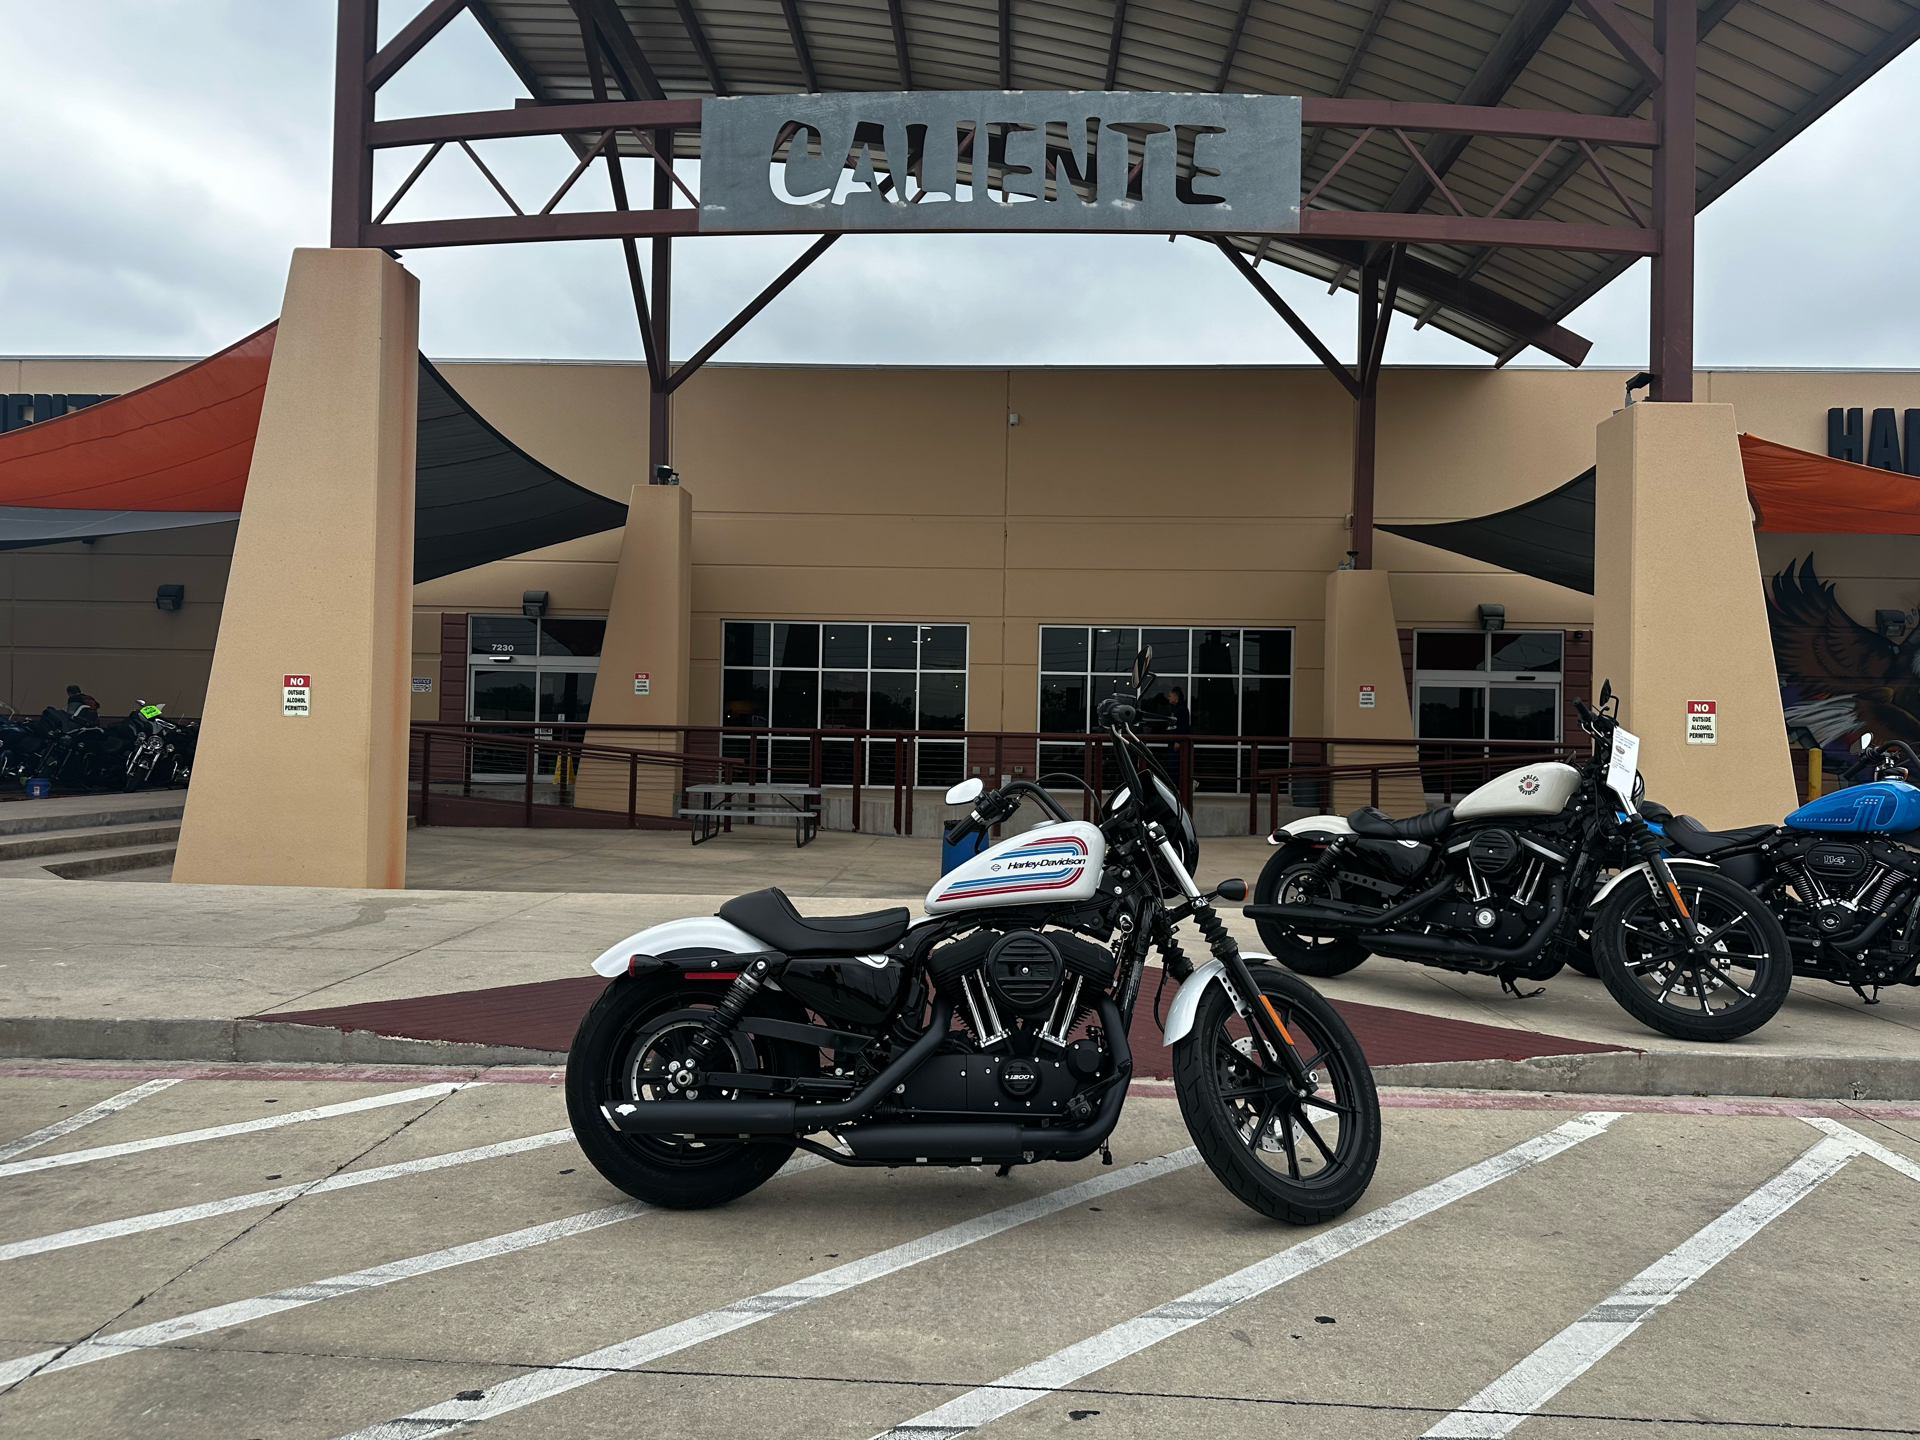 2021 Harley-Davidson Iron 1200™ in San Antonio, Texas - Photo 1